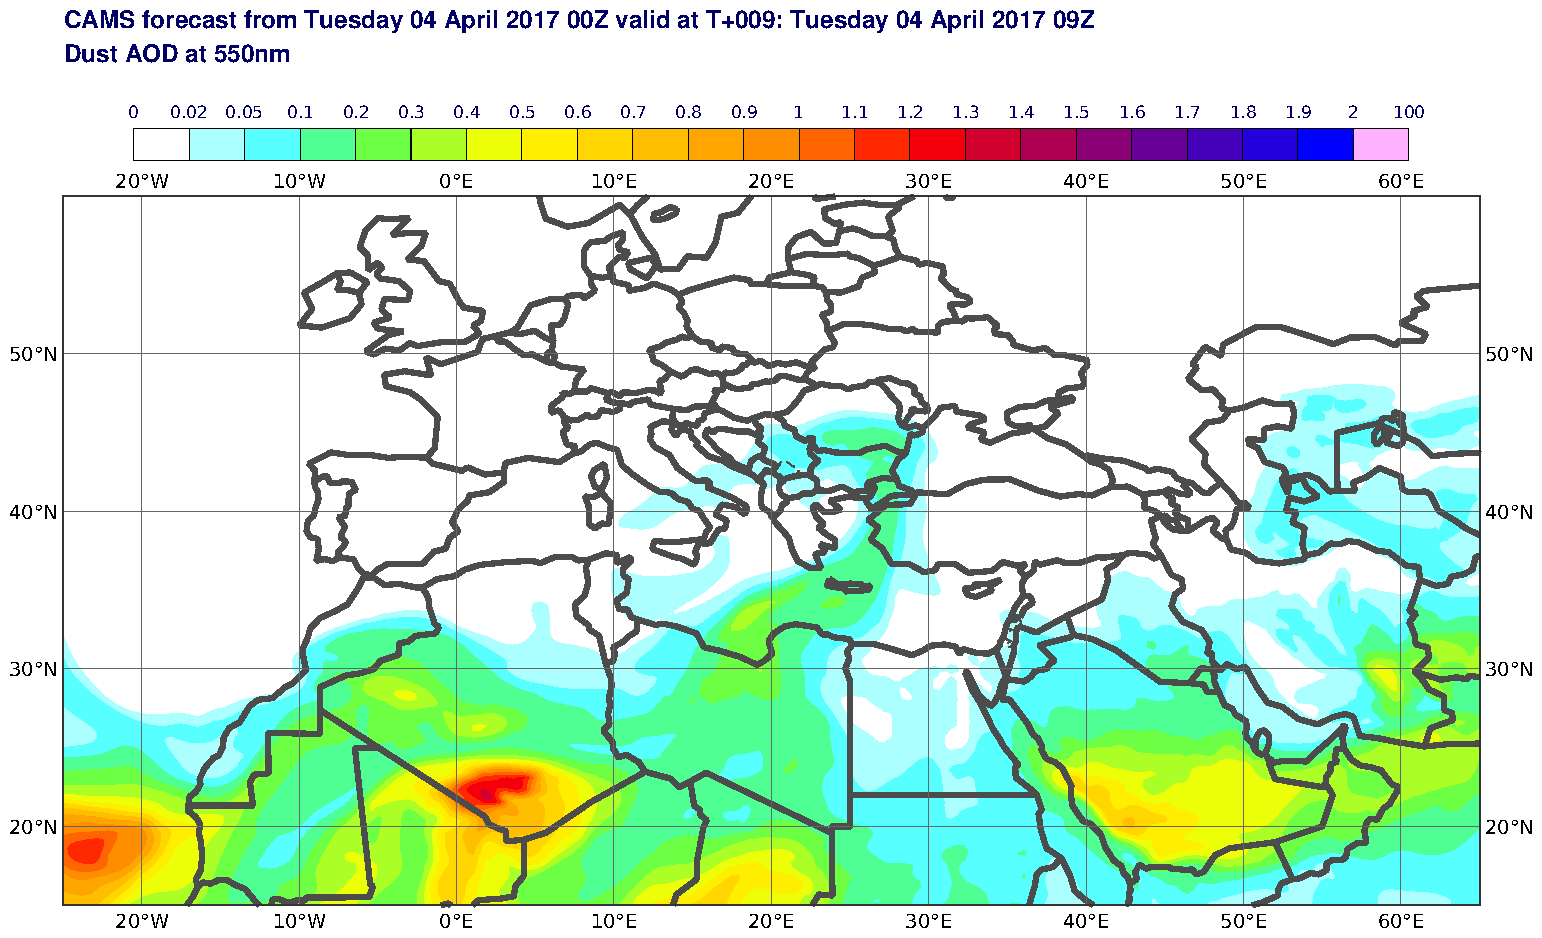 Dust AOD at 550nm valid at T9 - 2017-04-04 09:00